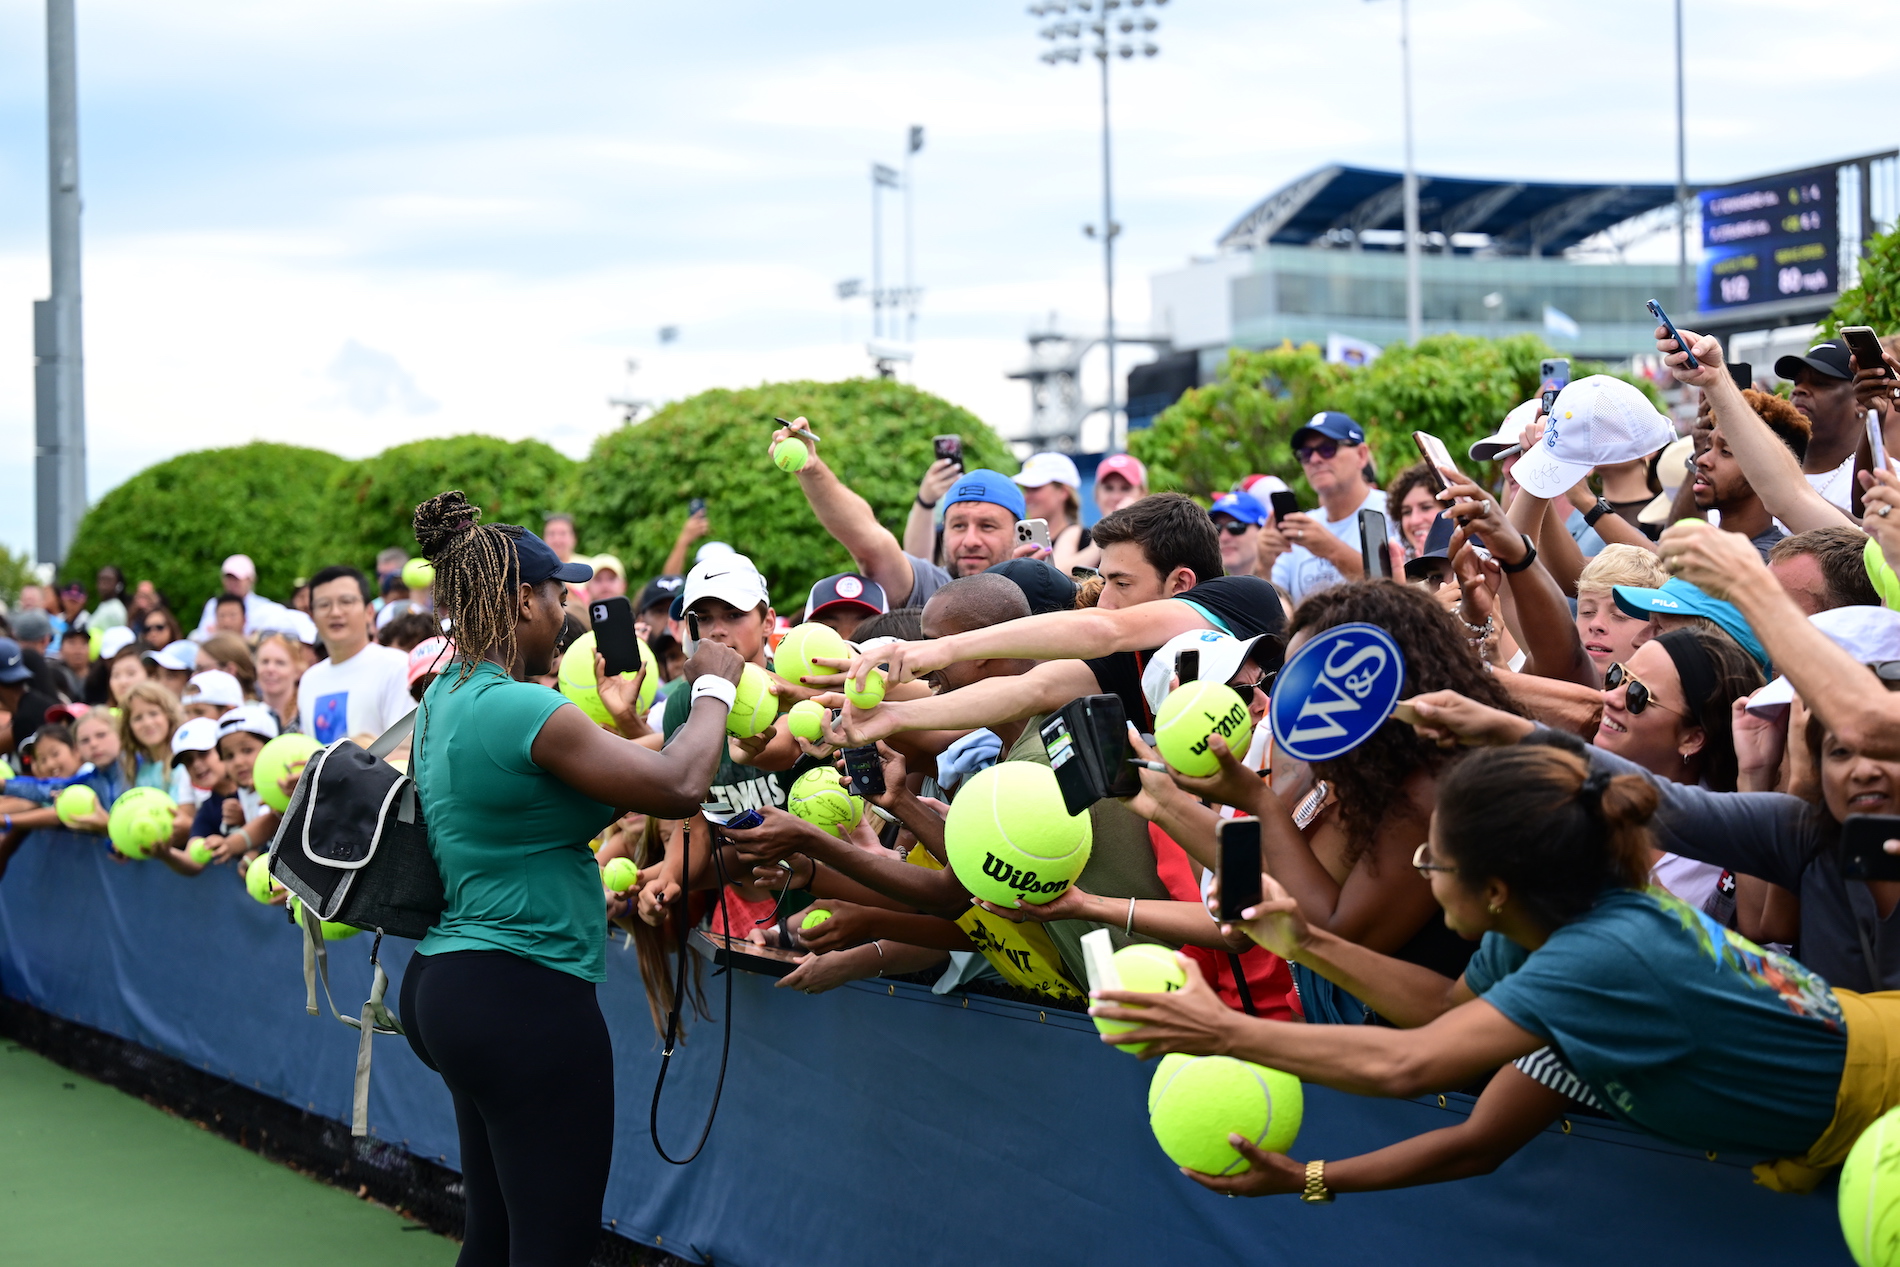 woman signing fans tennis balls